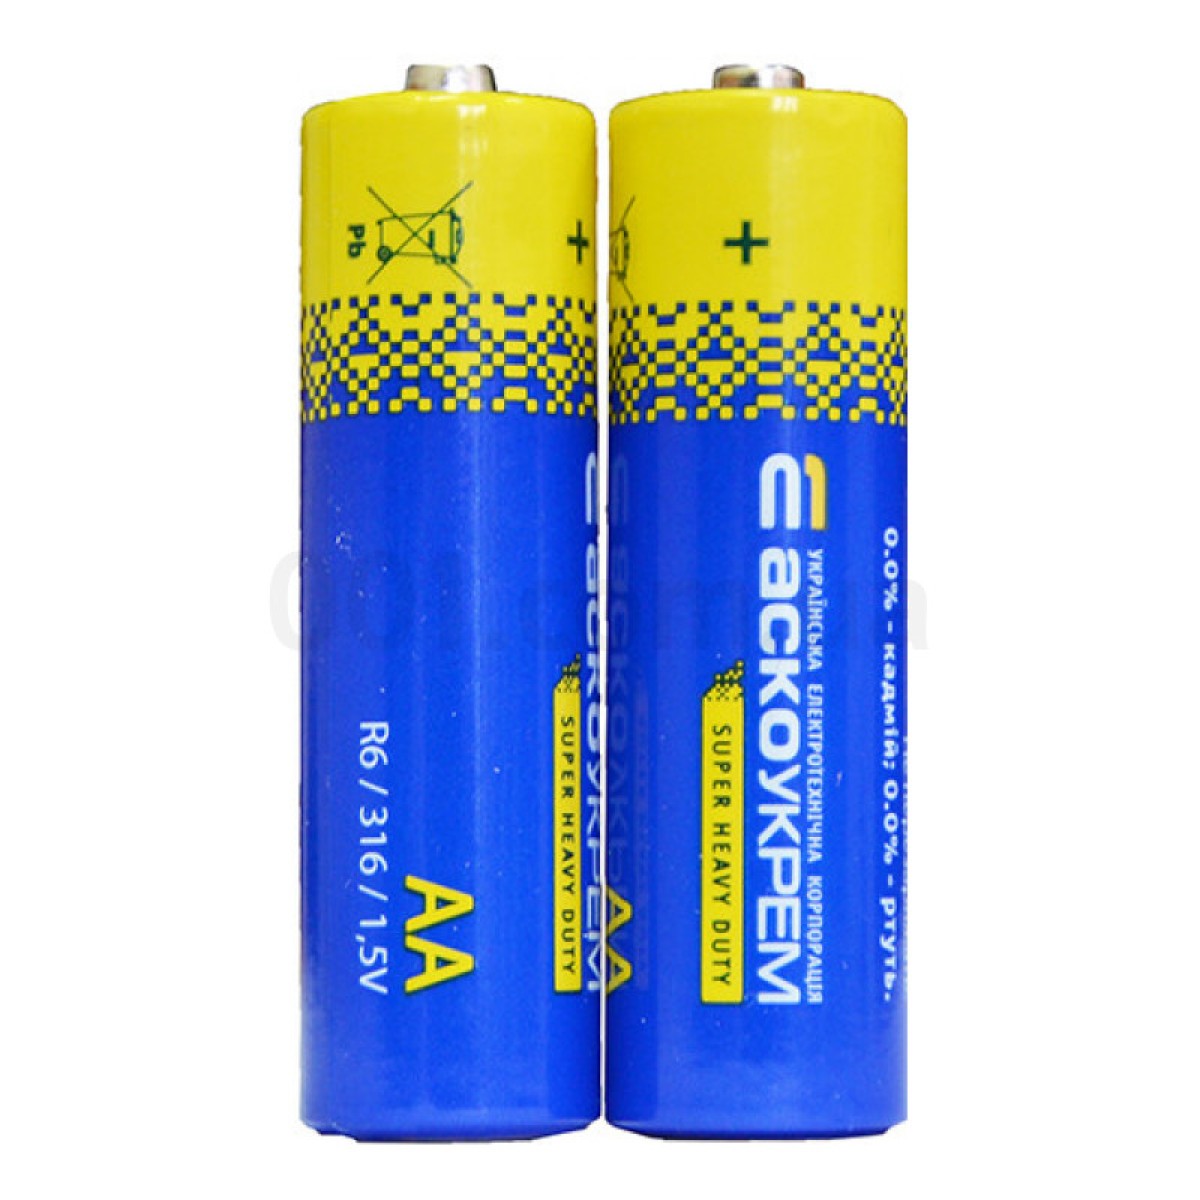 Батарейка сольова АА.R6.SP2, типорозмір AA упаковка shrink 2 шт., АСКО-УКРЕМ 98_98.jpg